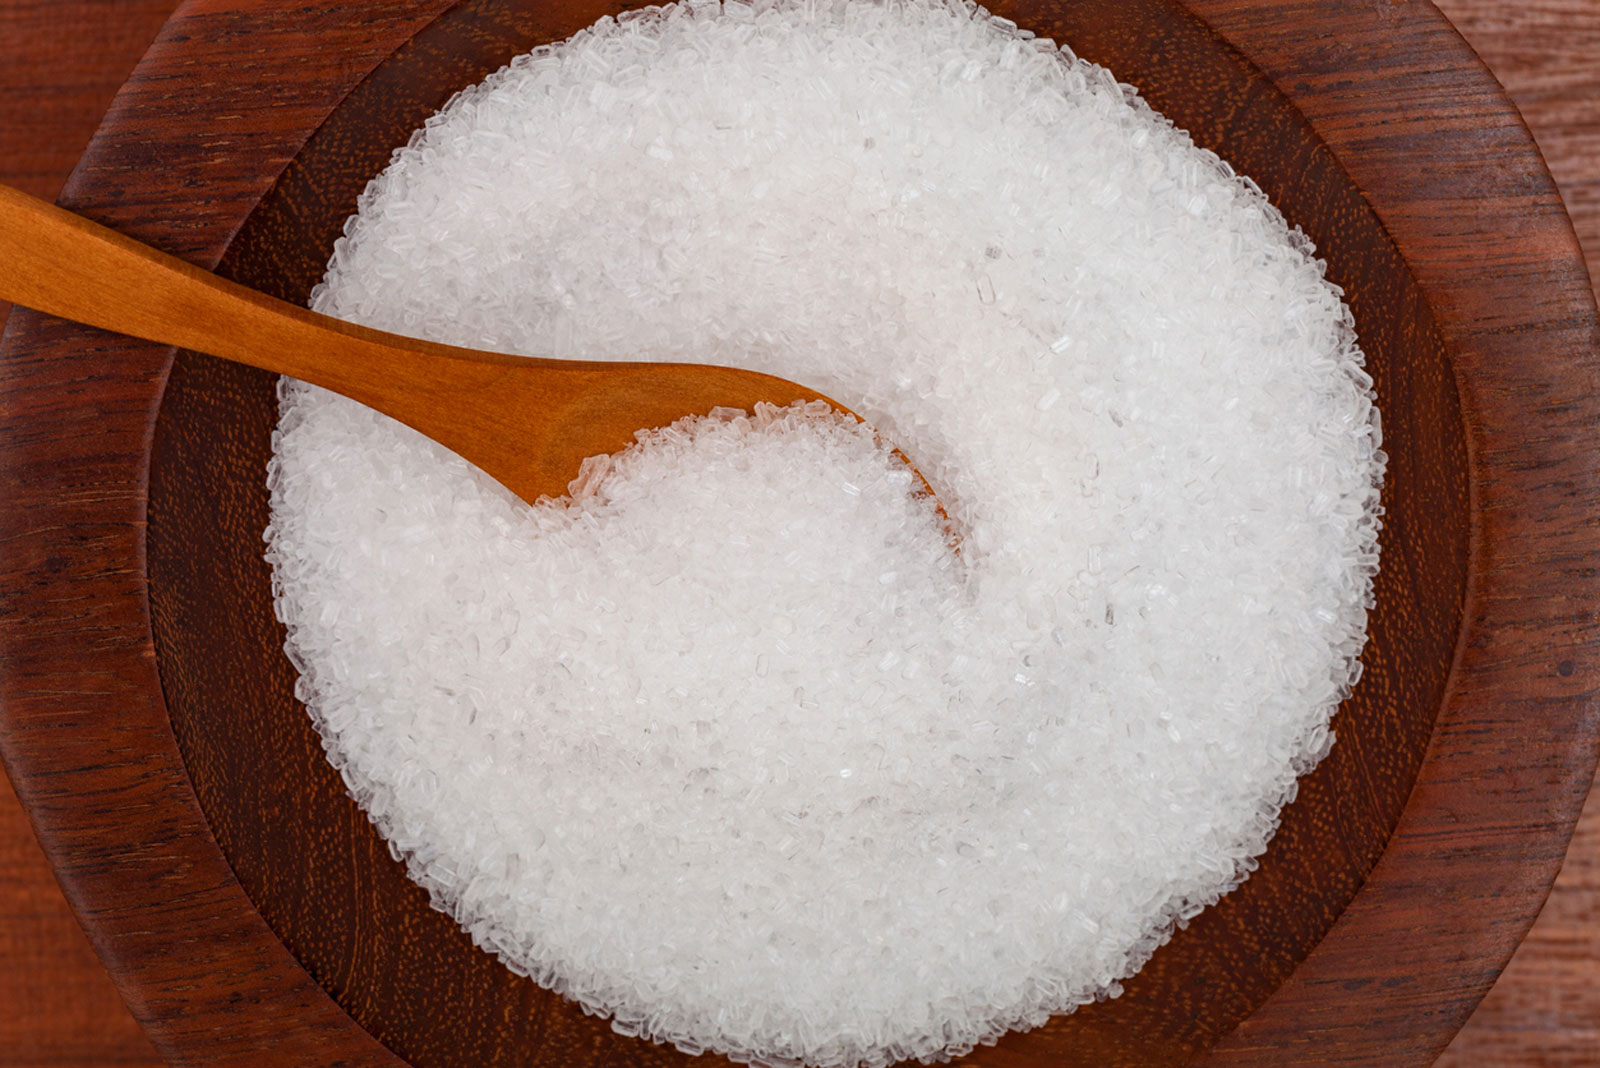 Does Epsom Salt Expire? How Long Does Epsom Salt Last?